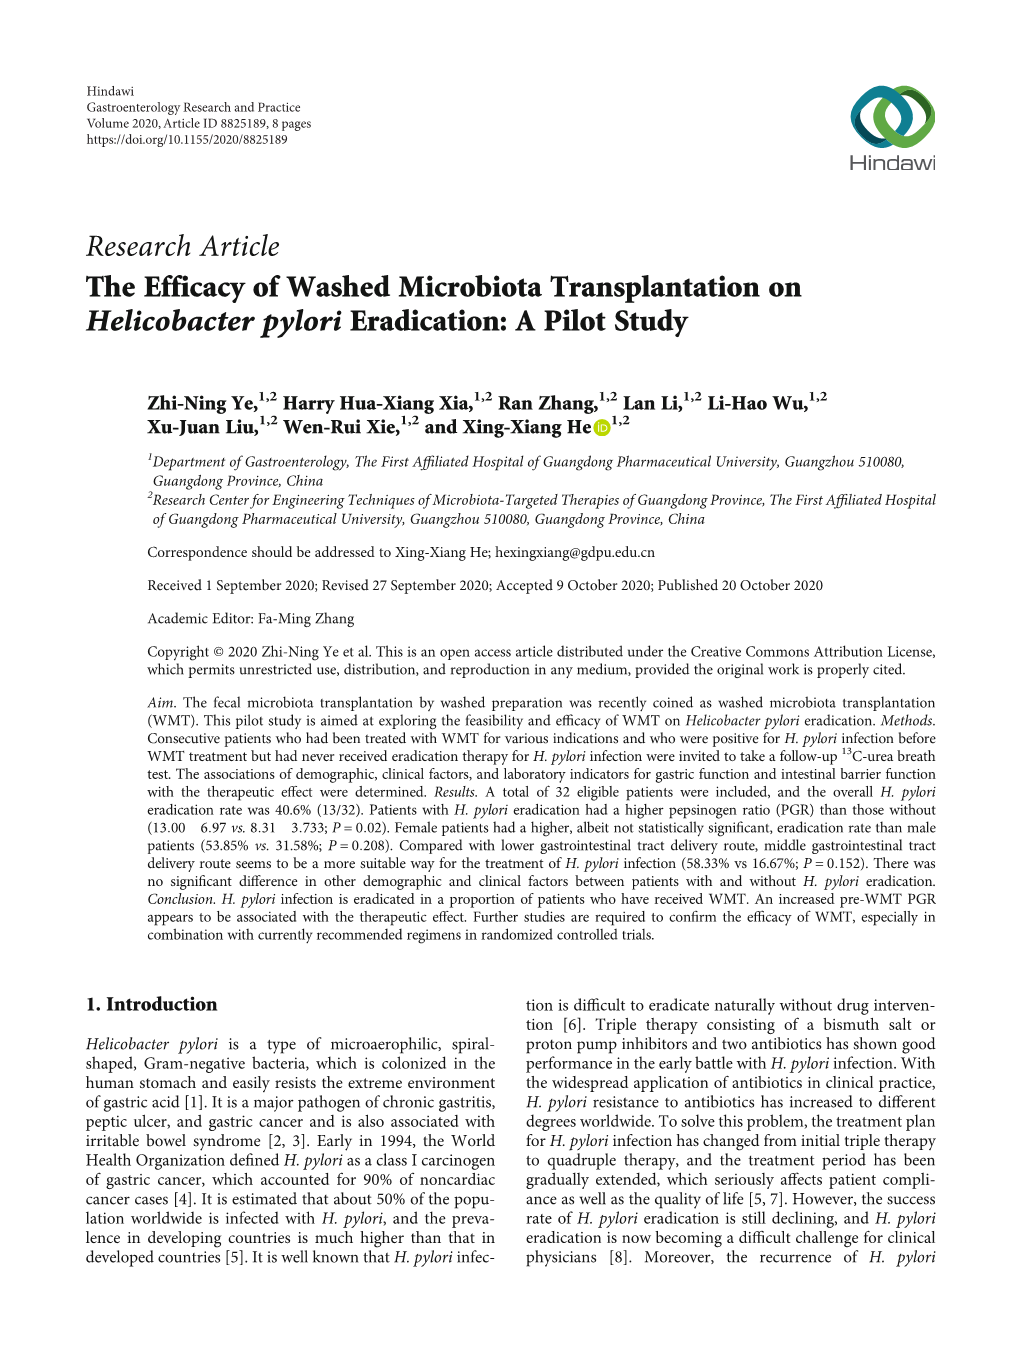 The Efficacy of Washed Microbiota Transplantation on Helicobacter Pylori Eradication: a Pilot Study